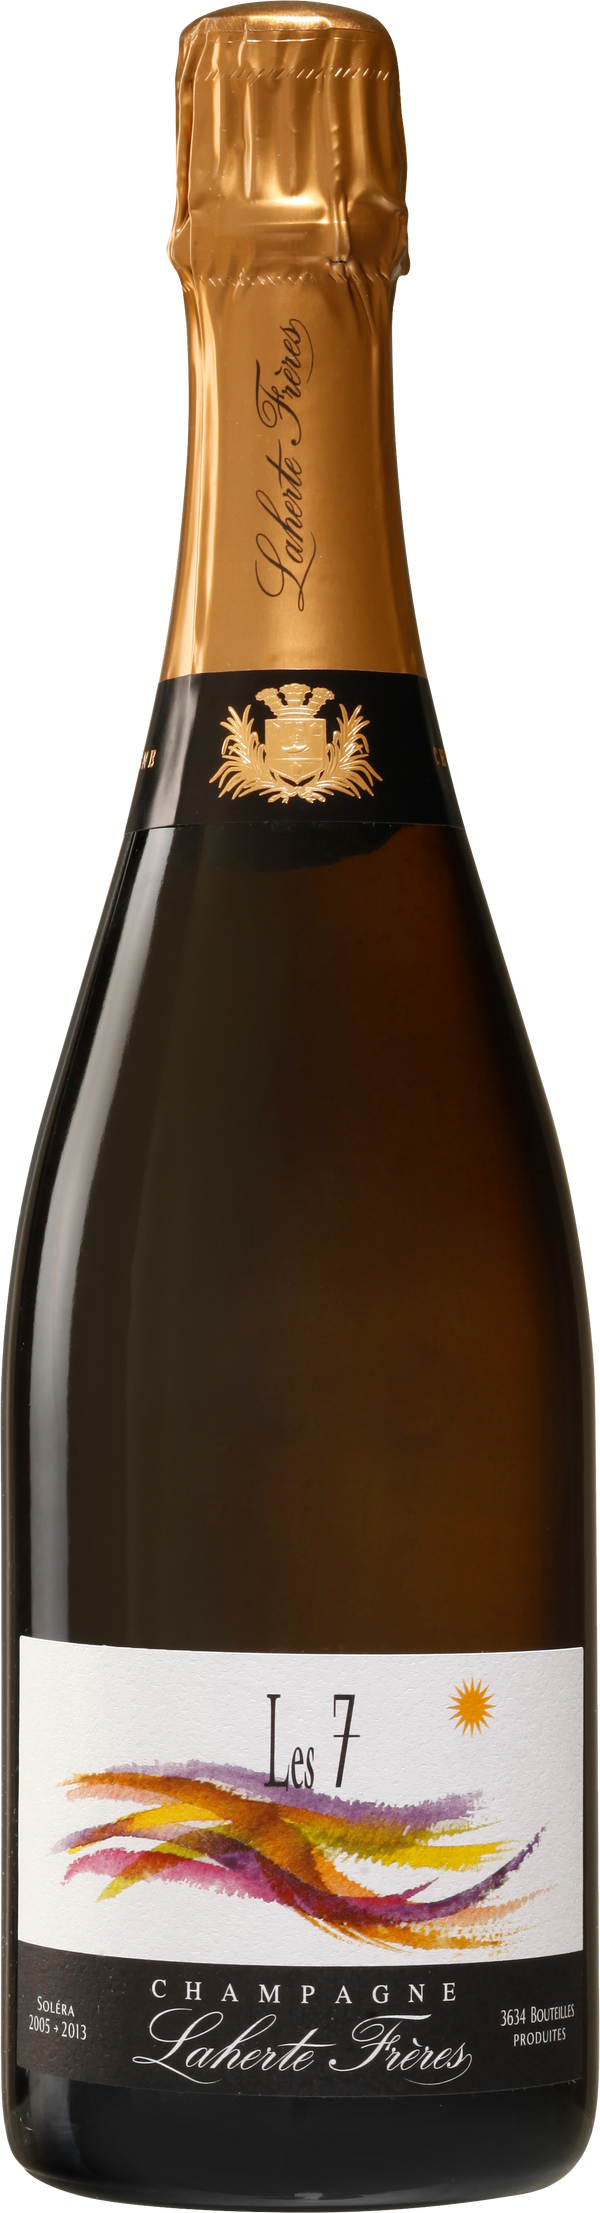 Champagne Laherte Frères Les 7 (Solera 05-17. Disg. Feb 2020)